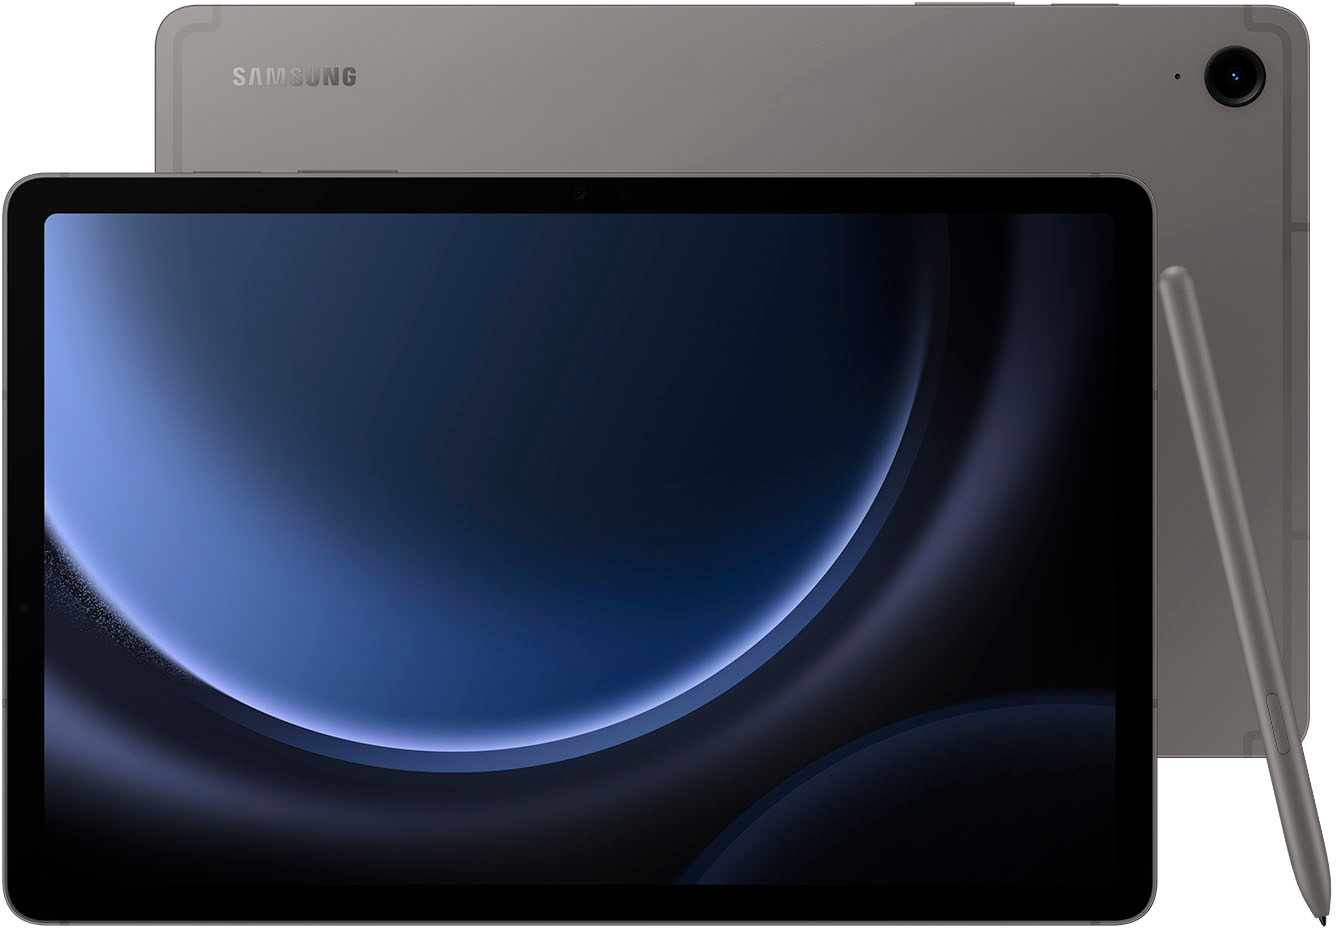 Samsung Galaxy Tab S9 Ultra vs Galaxy Tab S9+: a plus on top of a